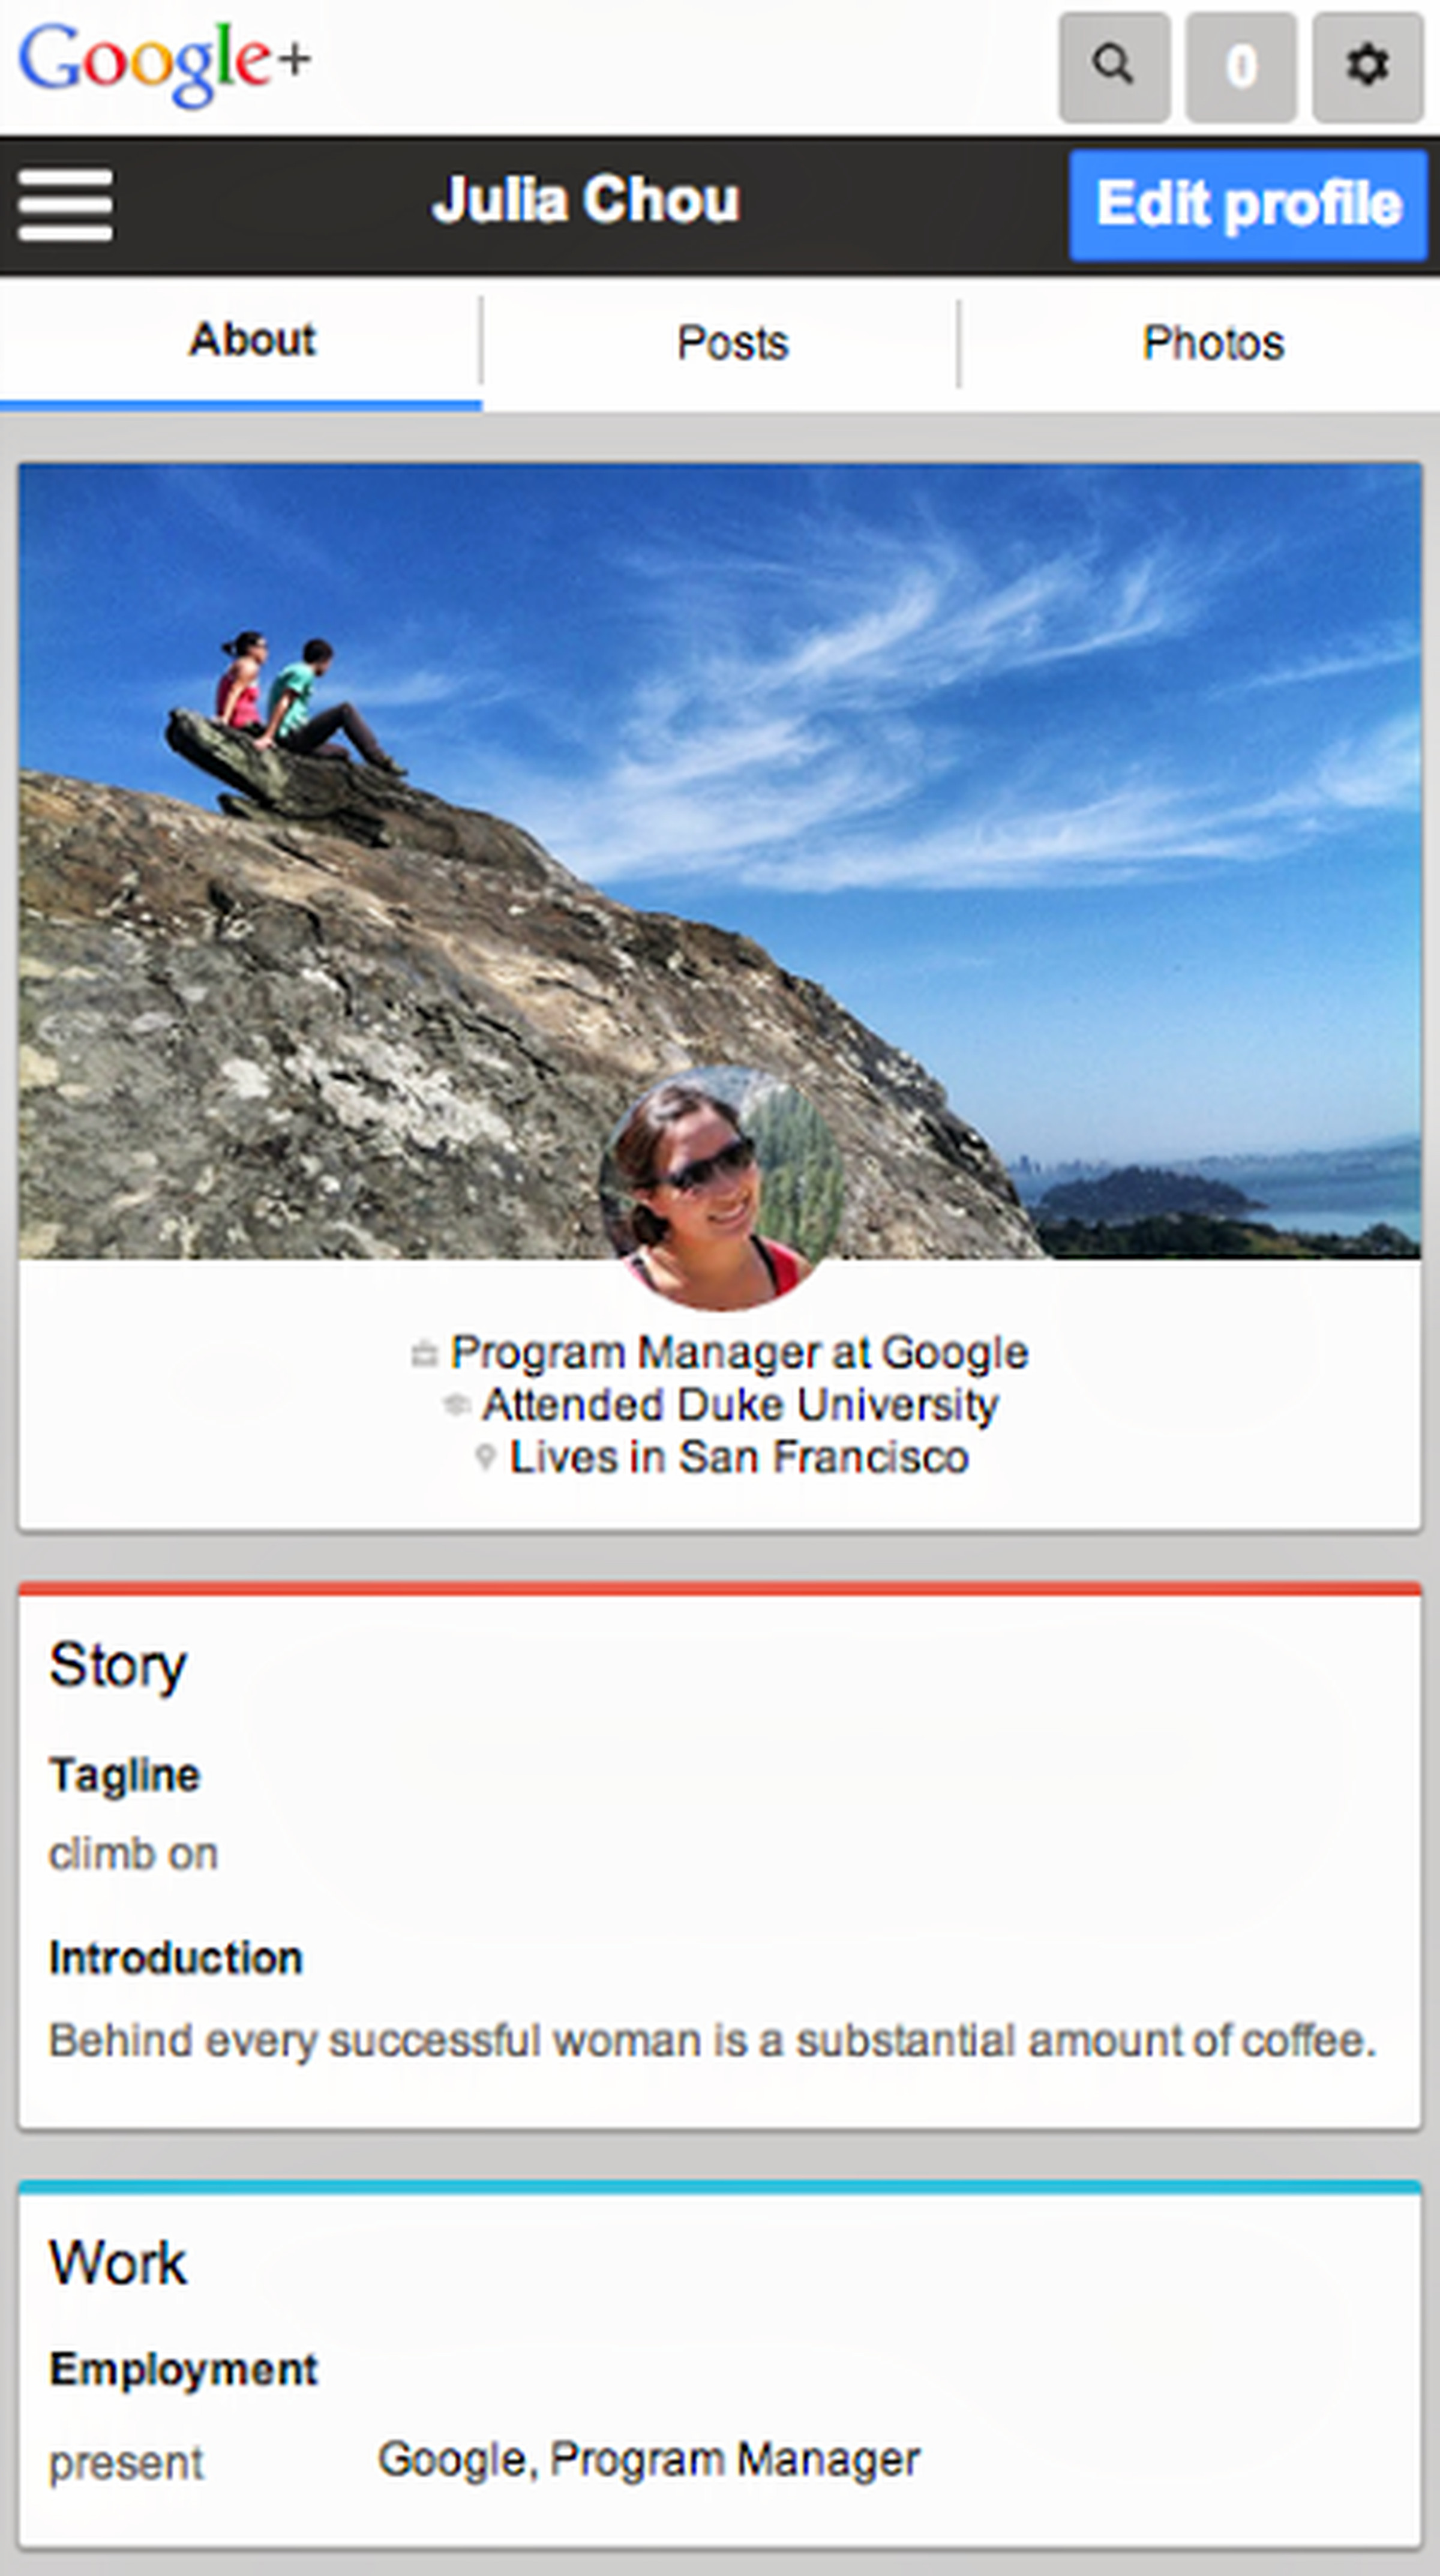 Google+ mobile site redesign screenshots